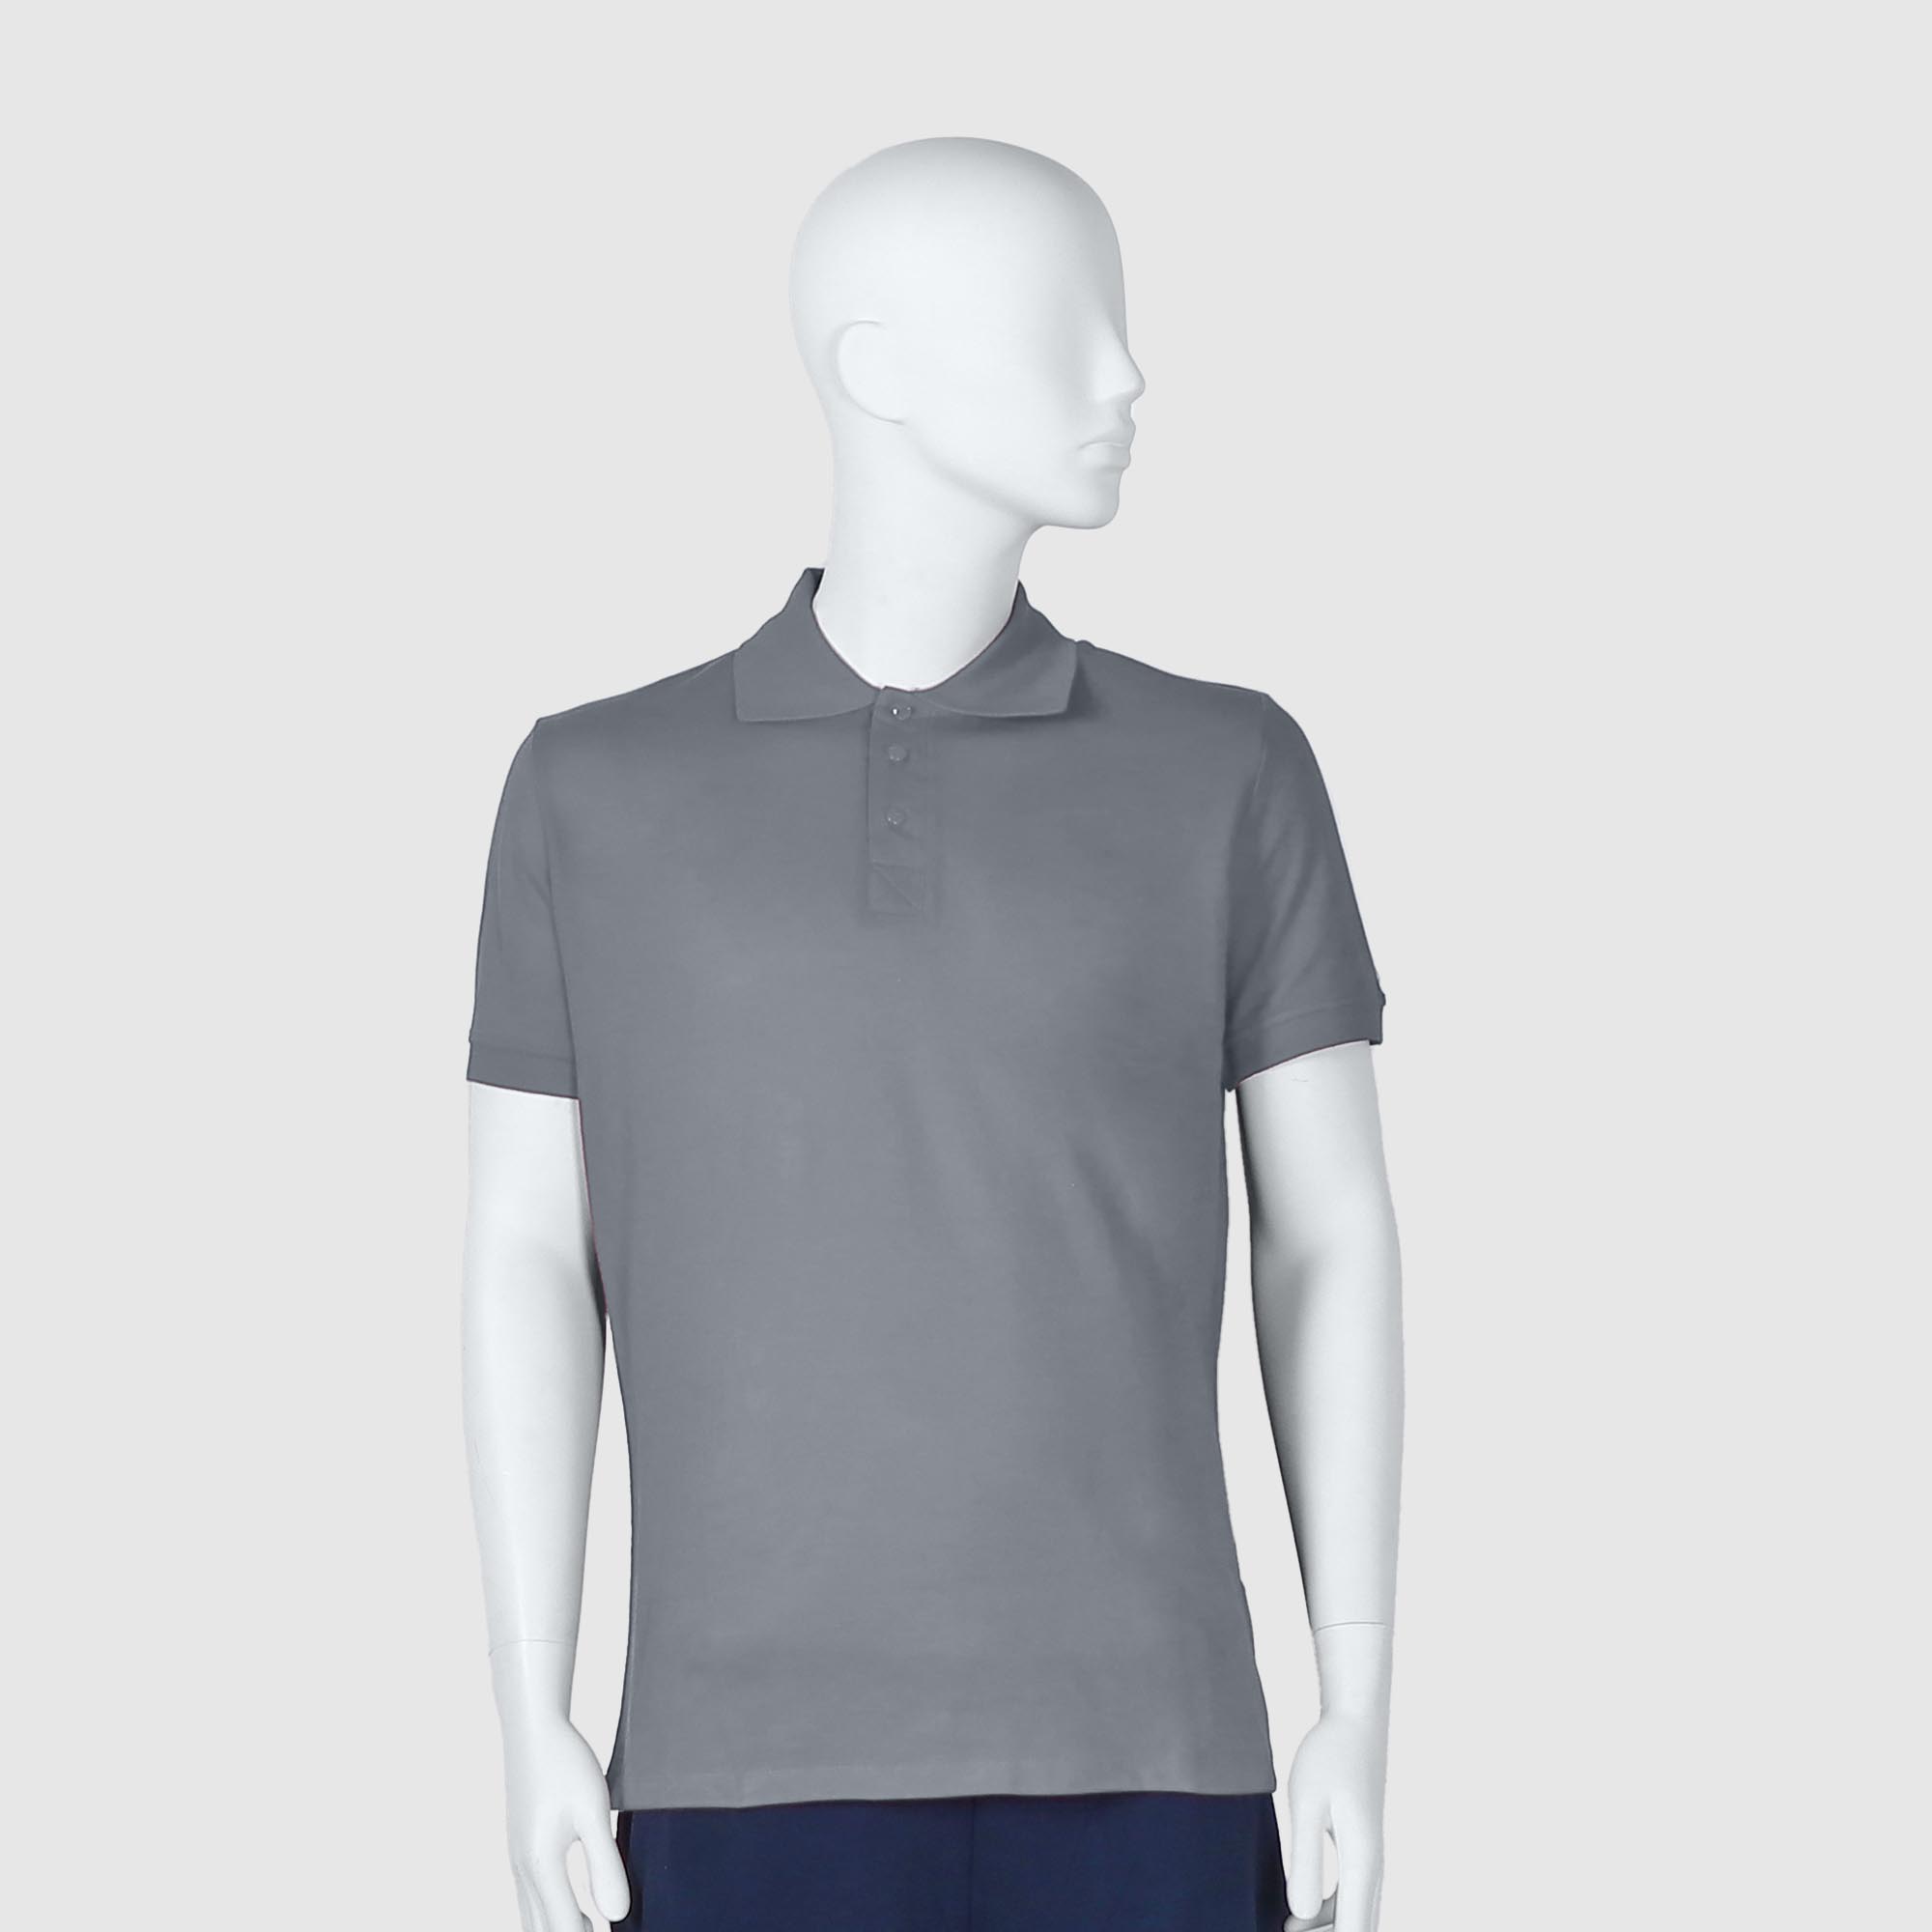 Мужская футболка-поло Diva Teks серая (DTD-11), цвет серый, размер 54-56